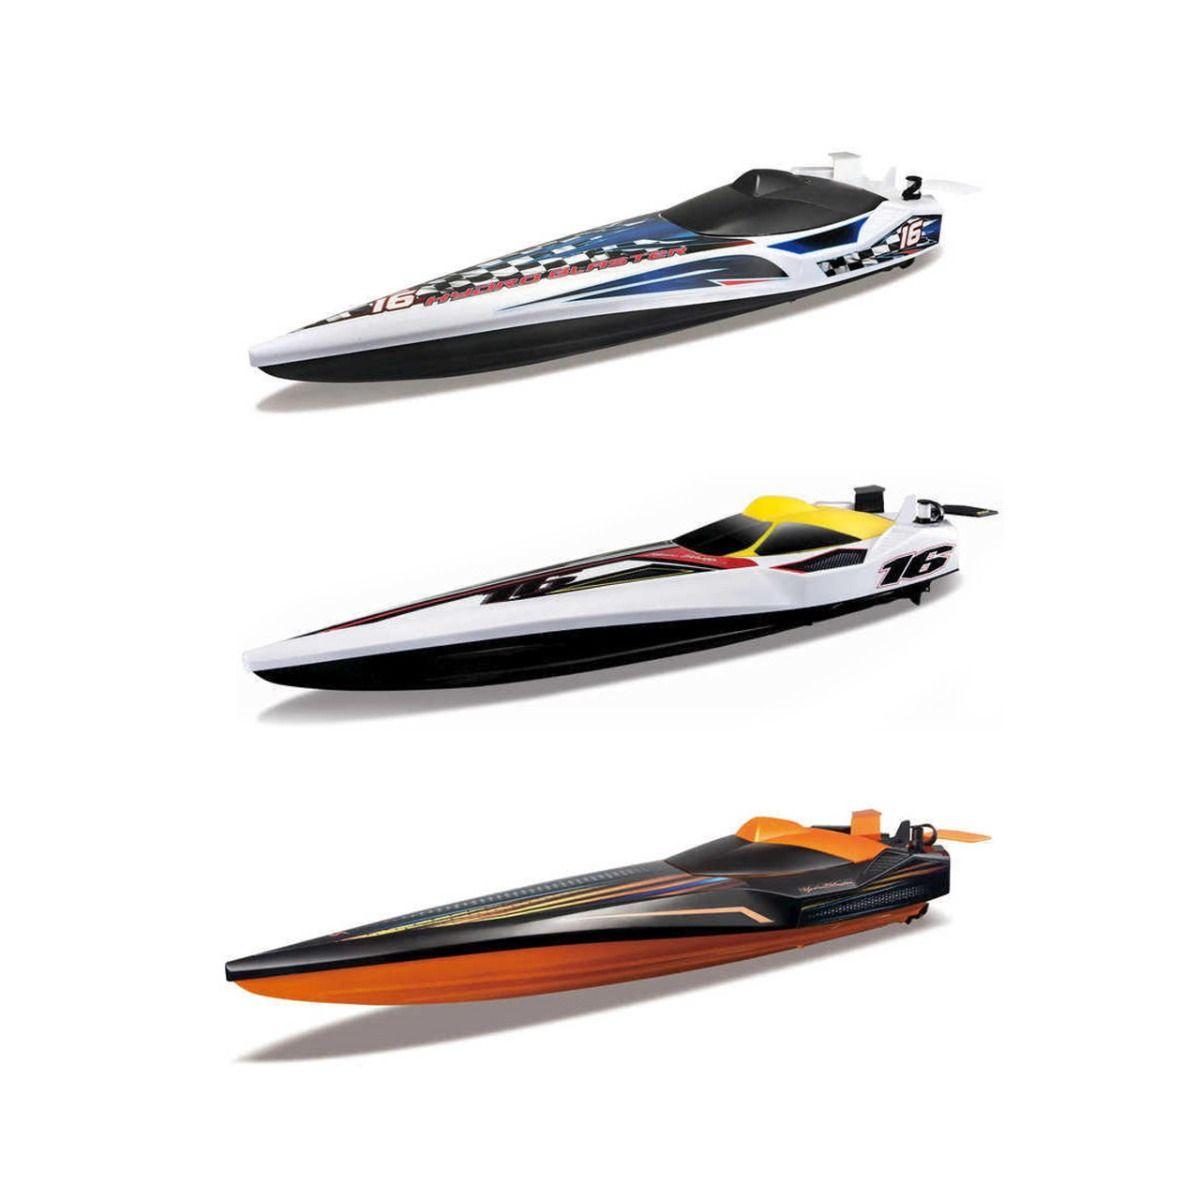 Maisto Hydro Blaster Speed Boat: High-Quality, Sleek, and Fast: The Maisto Hydro Blaster Speed Boat 